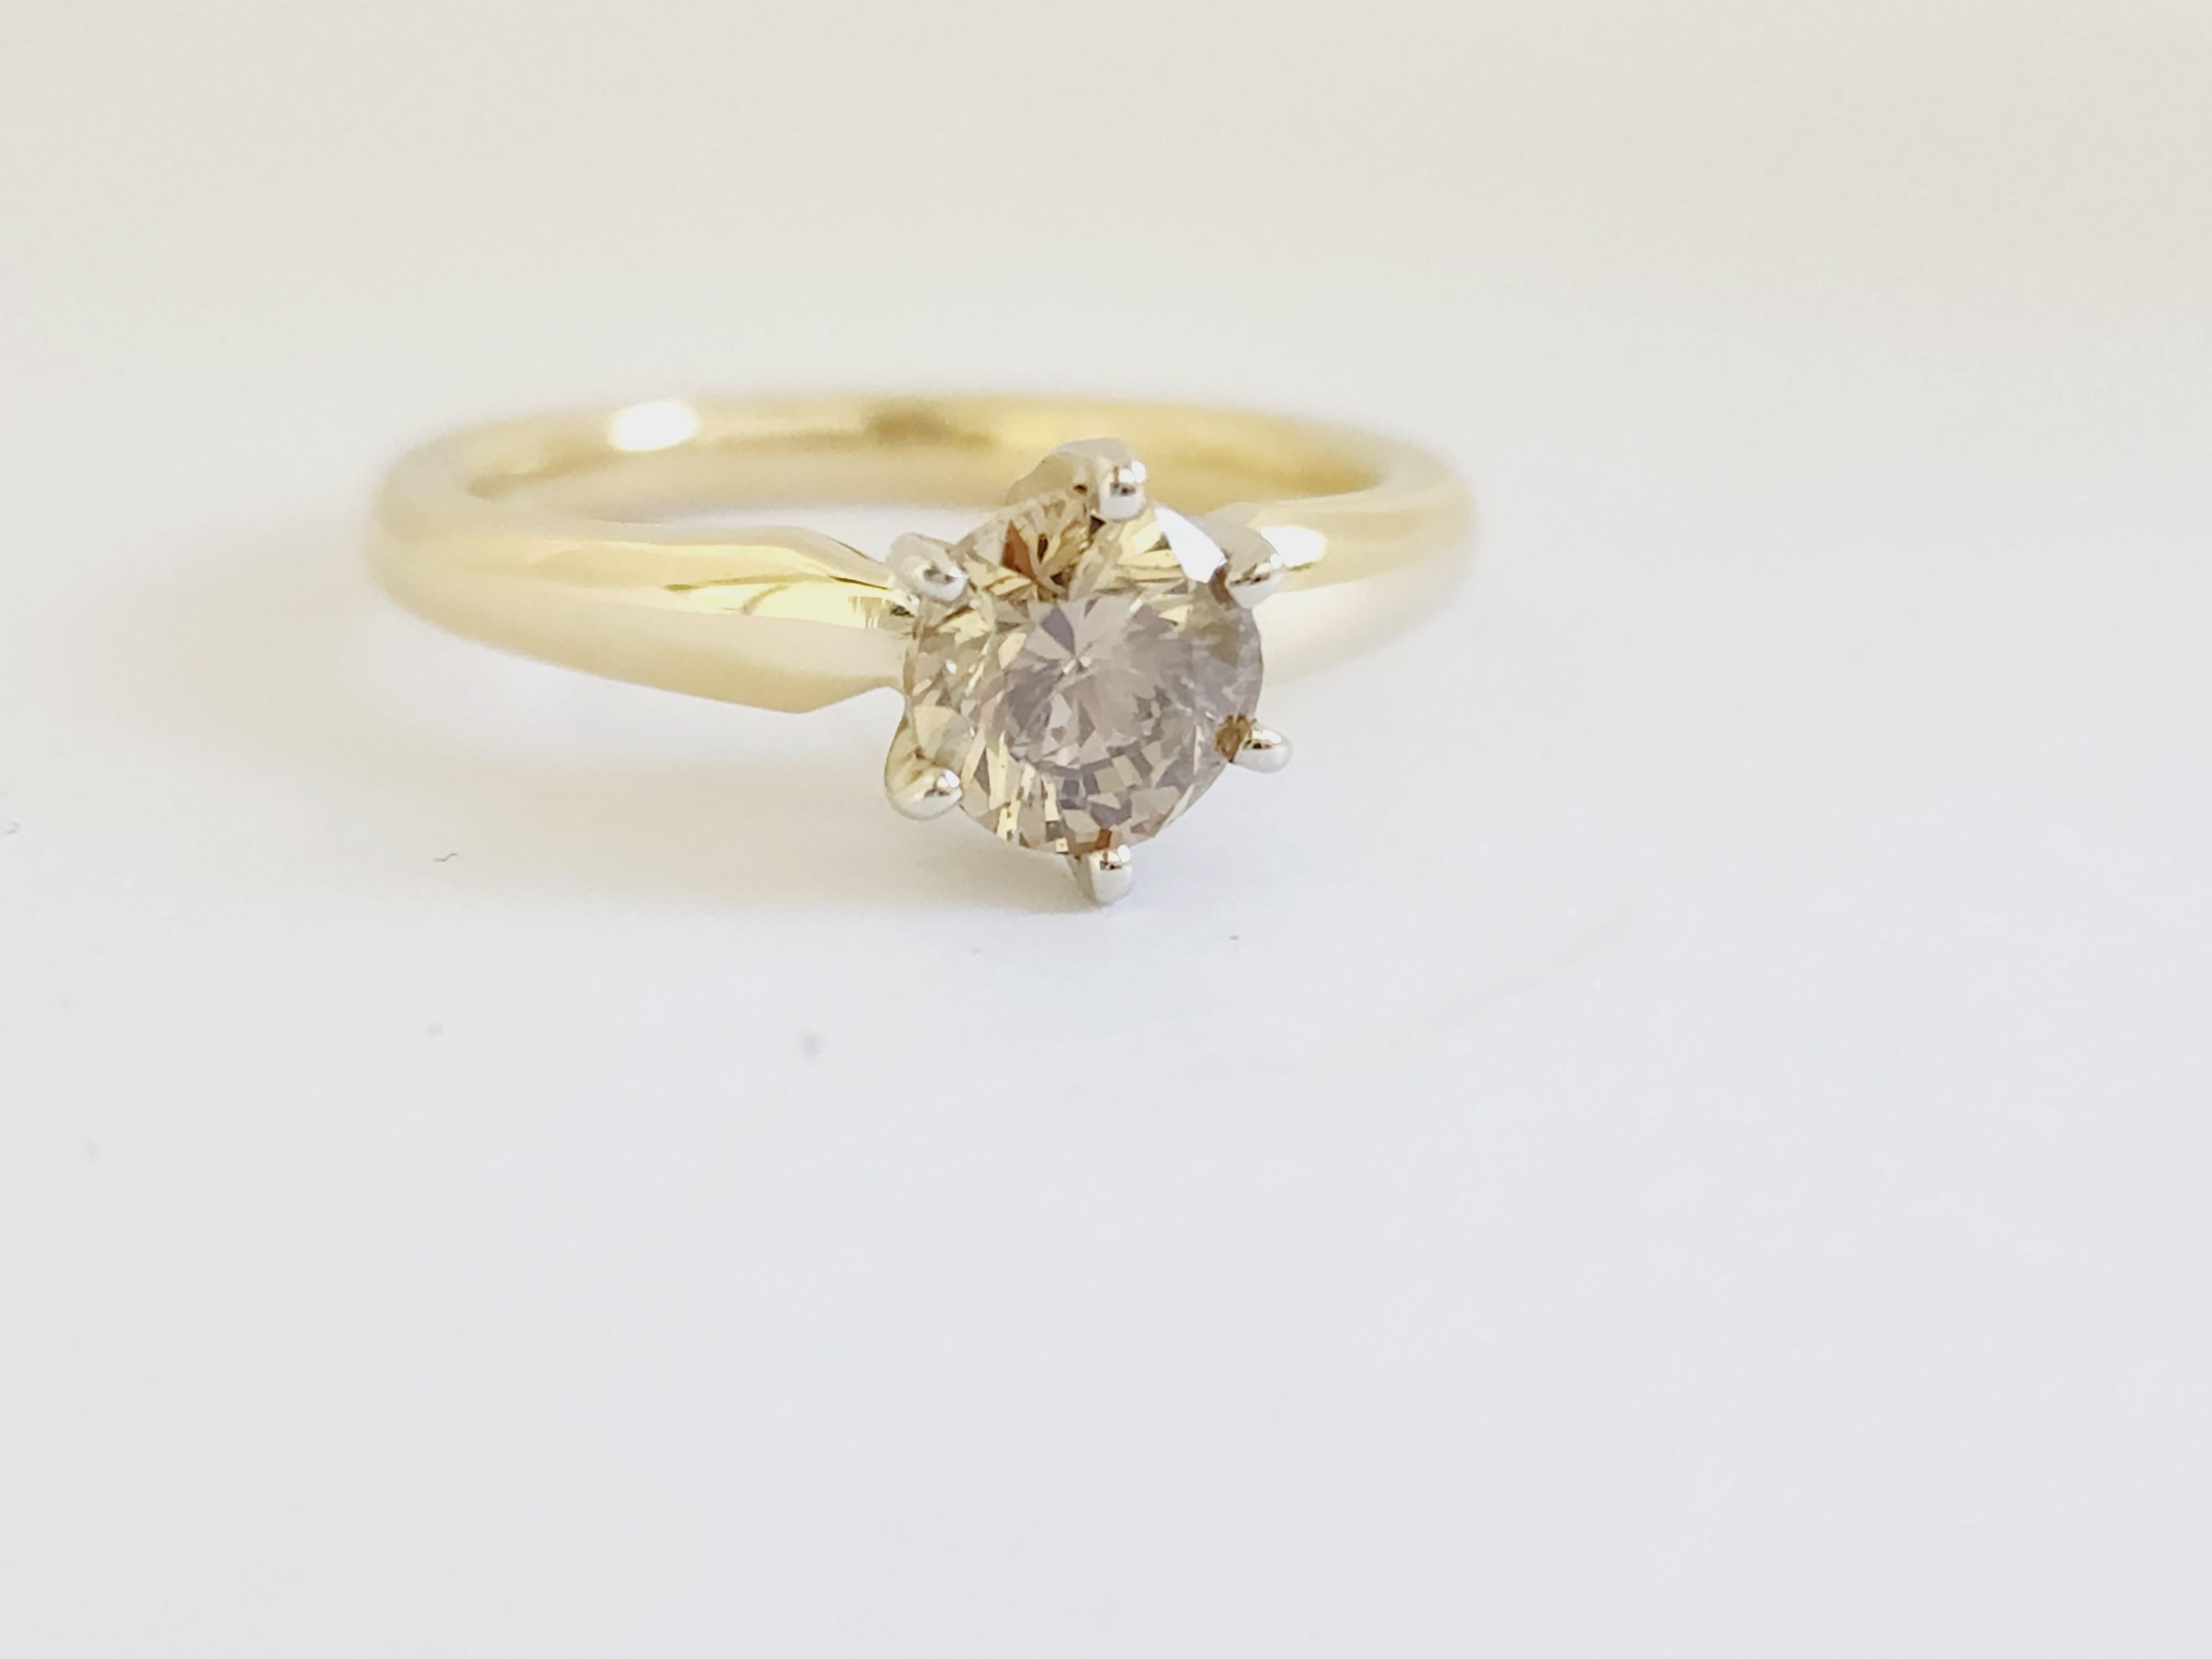 Natural fancy dark yellow brown round diamond weighing 1 carats. 
Set on 6-prong 14K yellow gold.
Ring size: 6.5